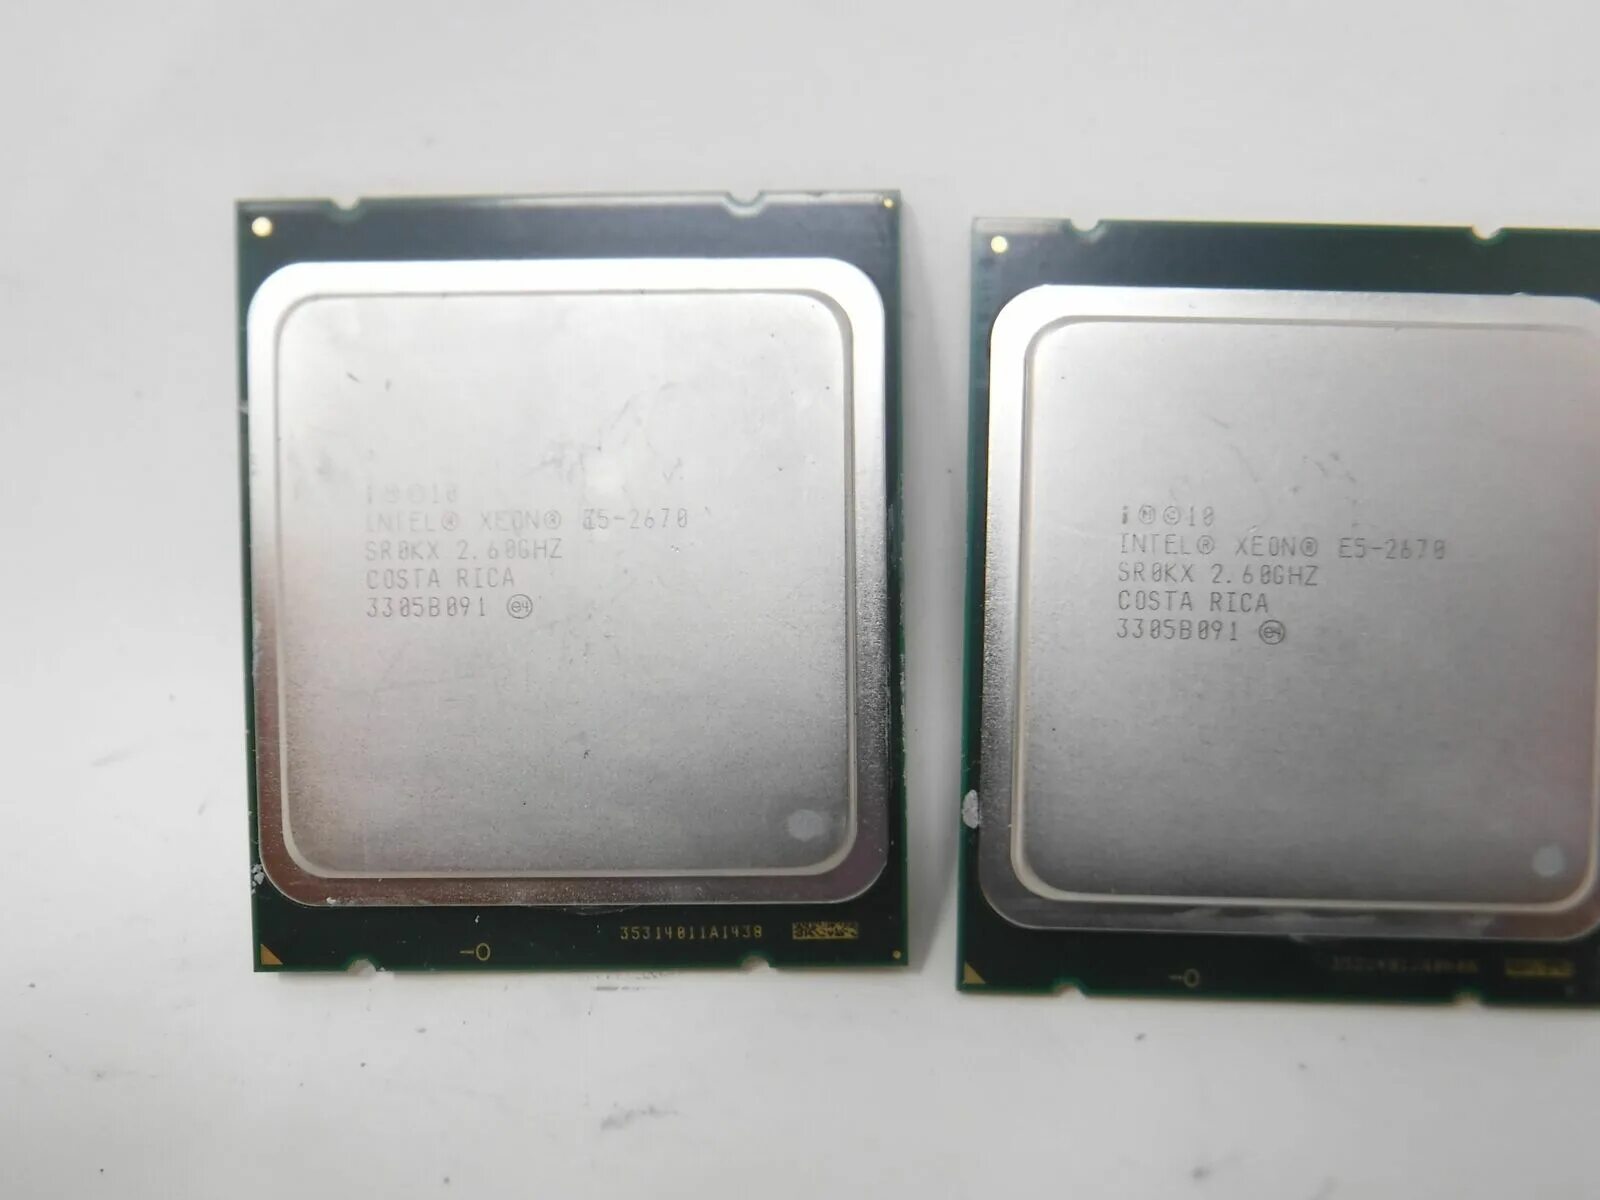 Интел 2670. Intel(r) Xeon(r) CPU e5-2670 0 @ 2.60GHZ 2.60 GHZ. Intel Xeon 8480. Intel(r) Xeon(r) CPU e5-2650 v2 @ 2.60GHZ 2.60 GHZ. Intel se7320sp2.